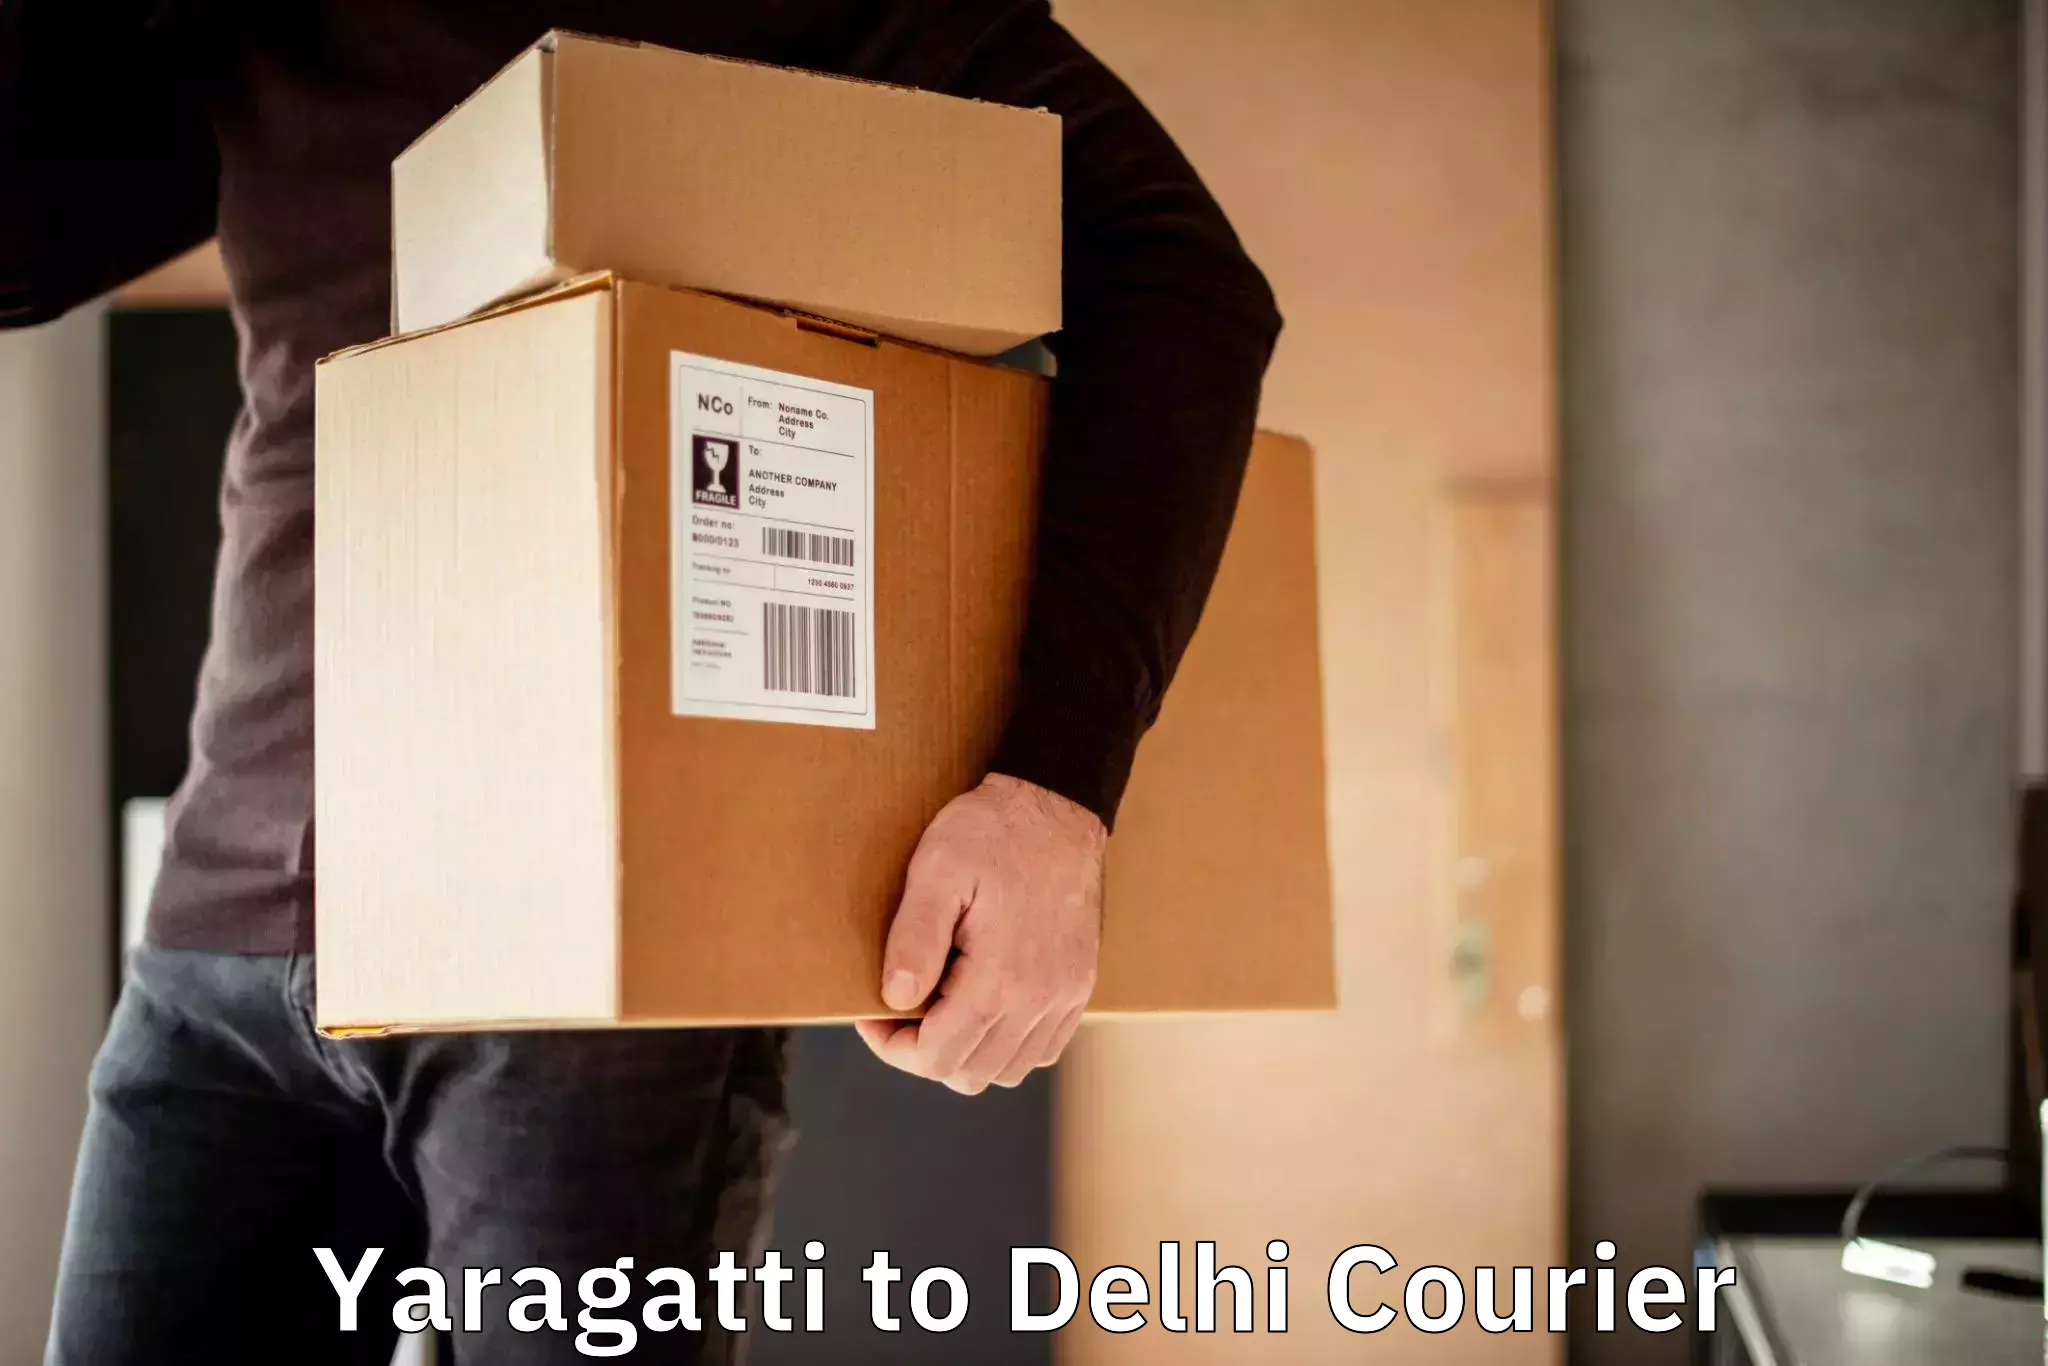 Express package handling Yaragatti to University of Delhi